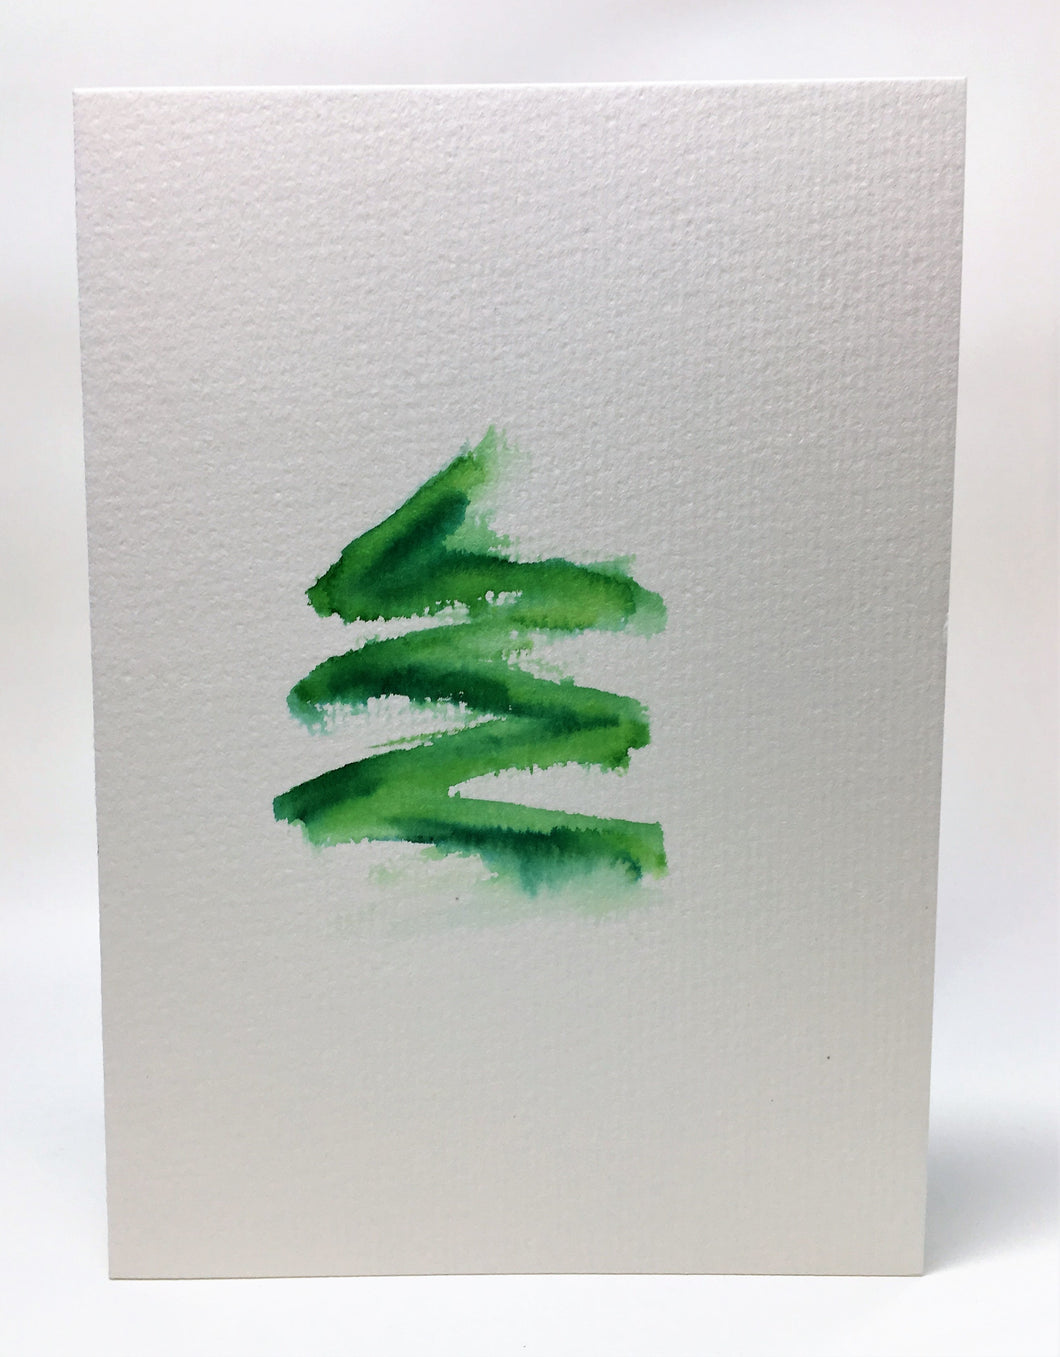 Original Hand Painted Christmas Card - Abstract Green Christmas Tree 2 - eDgE dEsiGn London